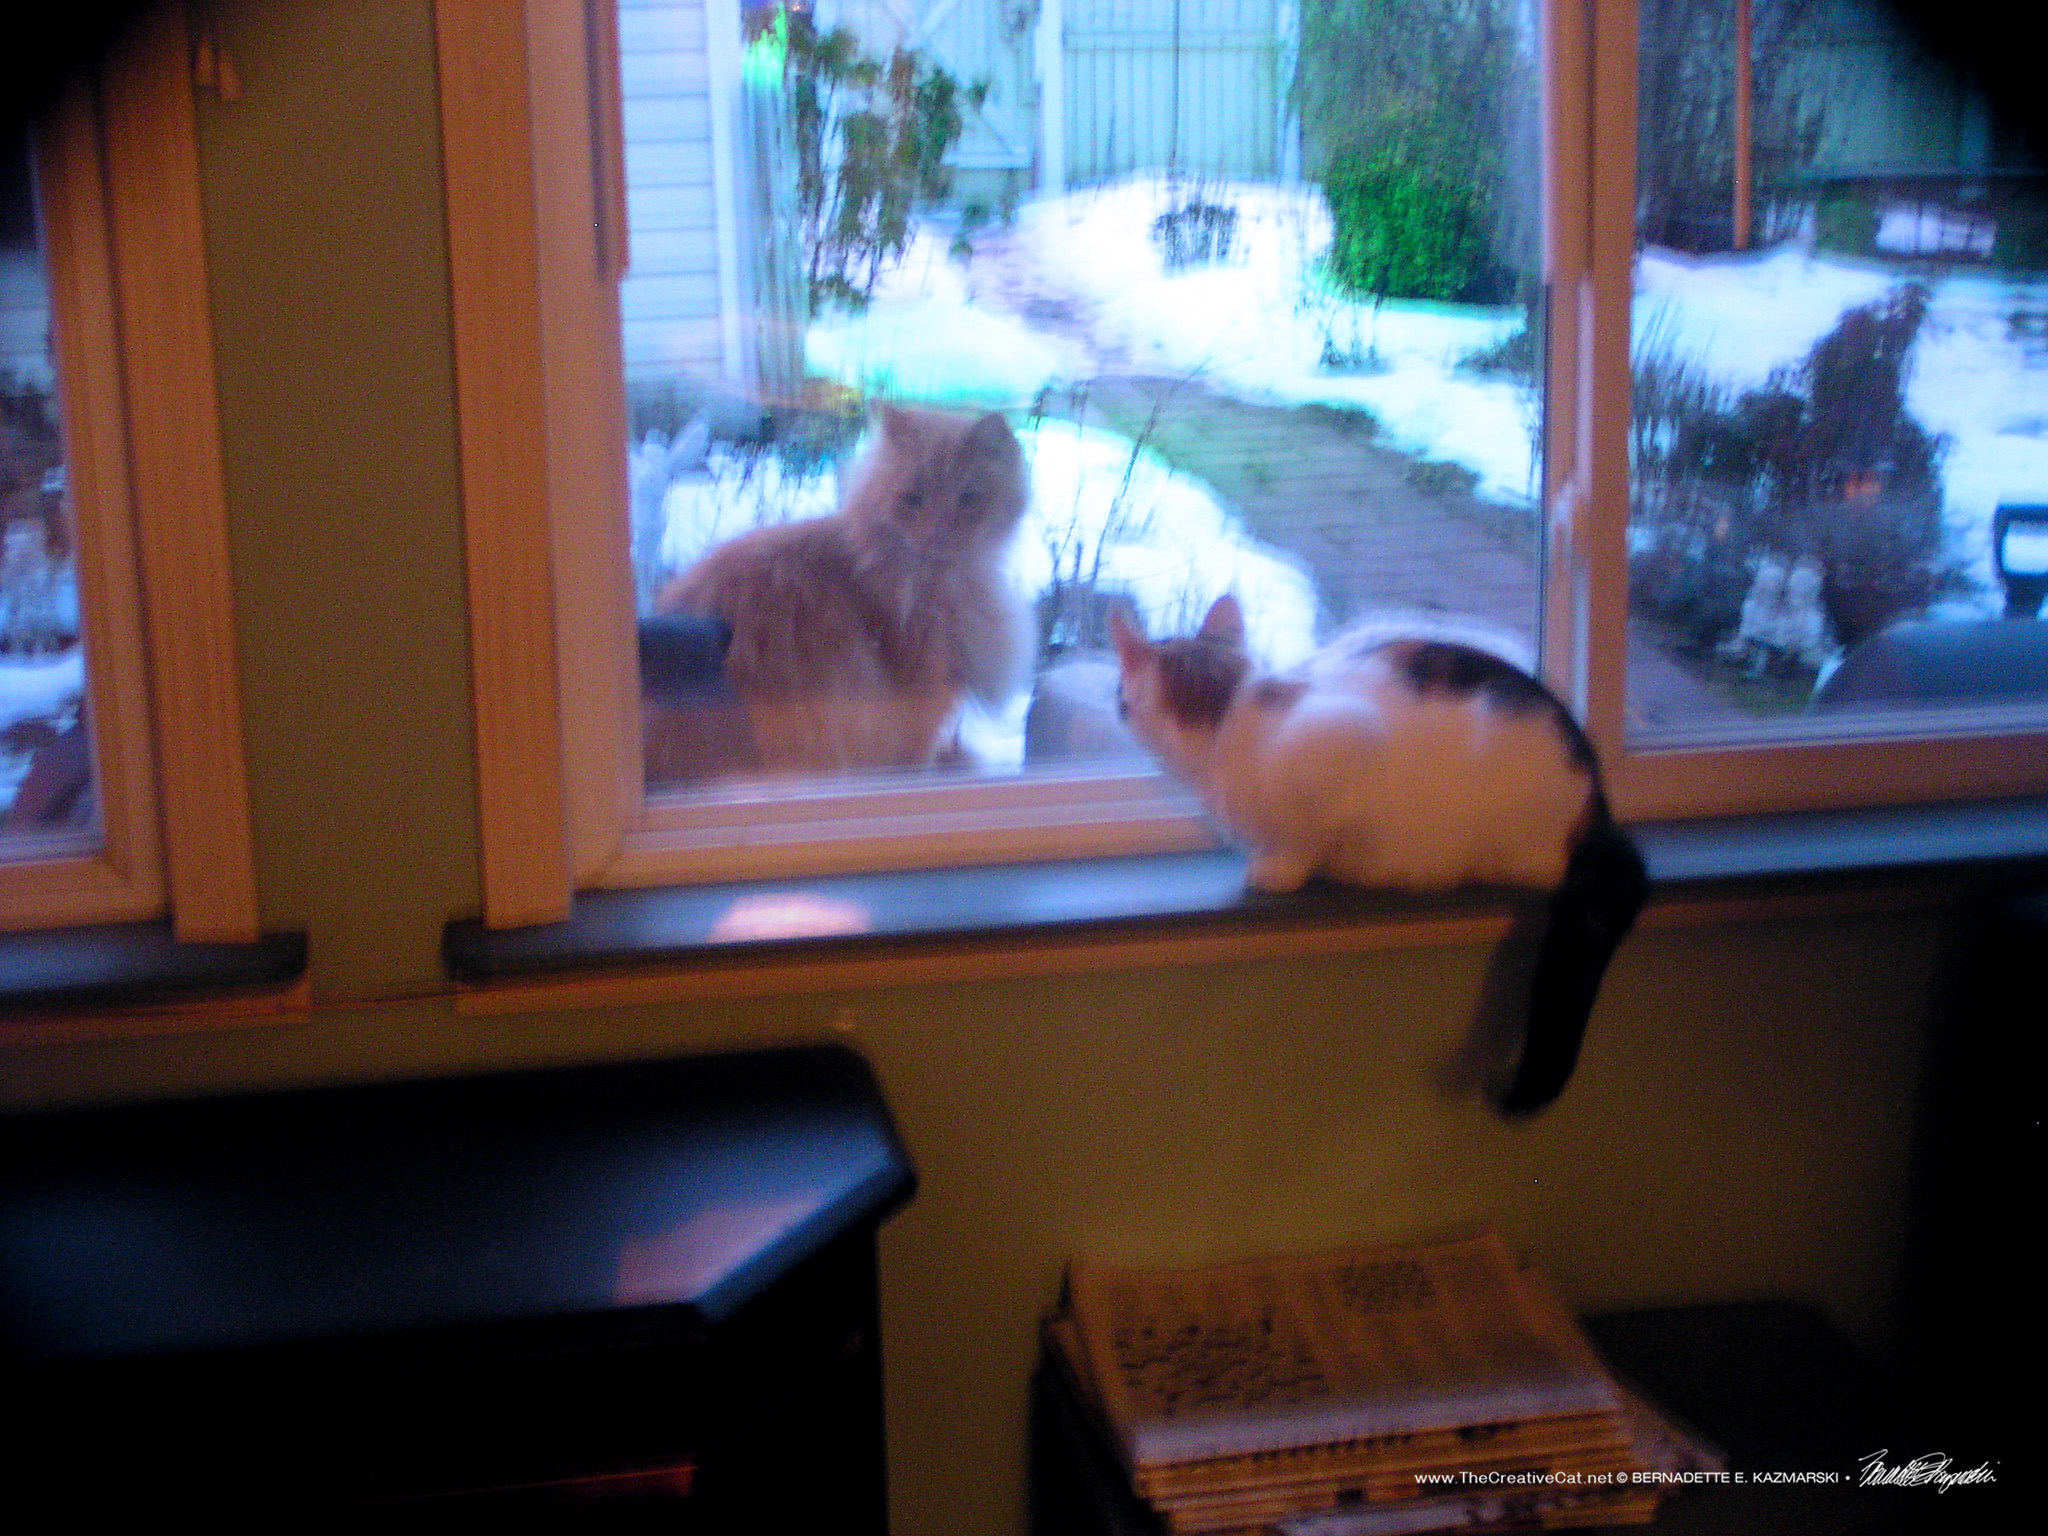 orange cat outside calico cat inside